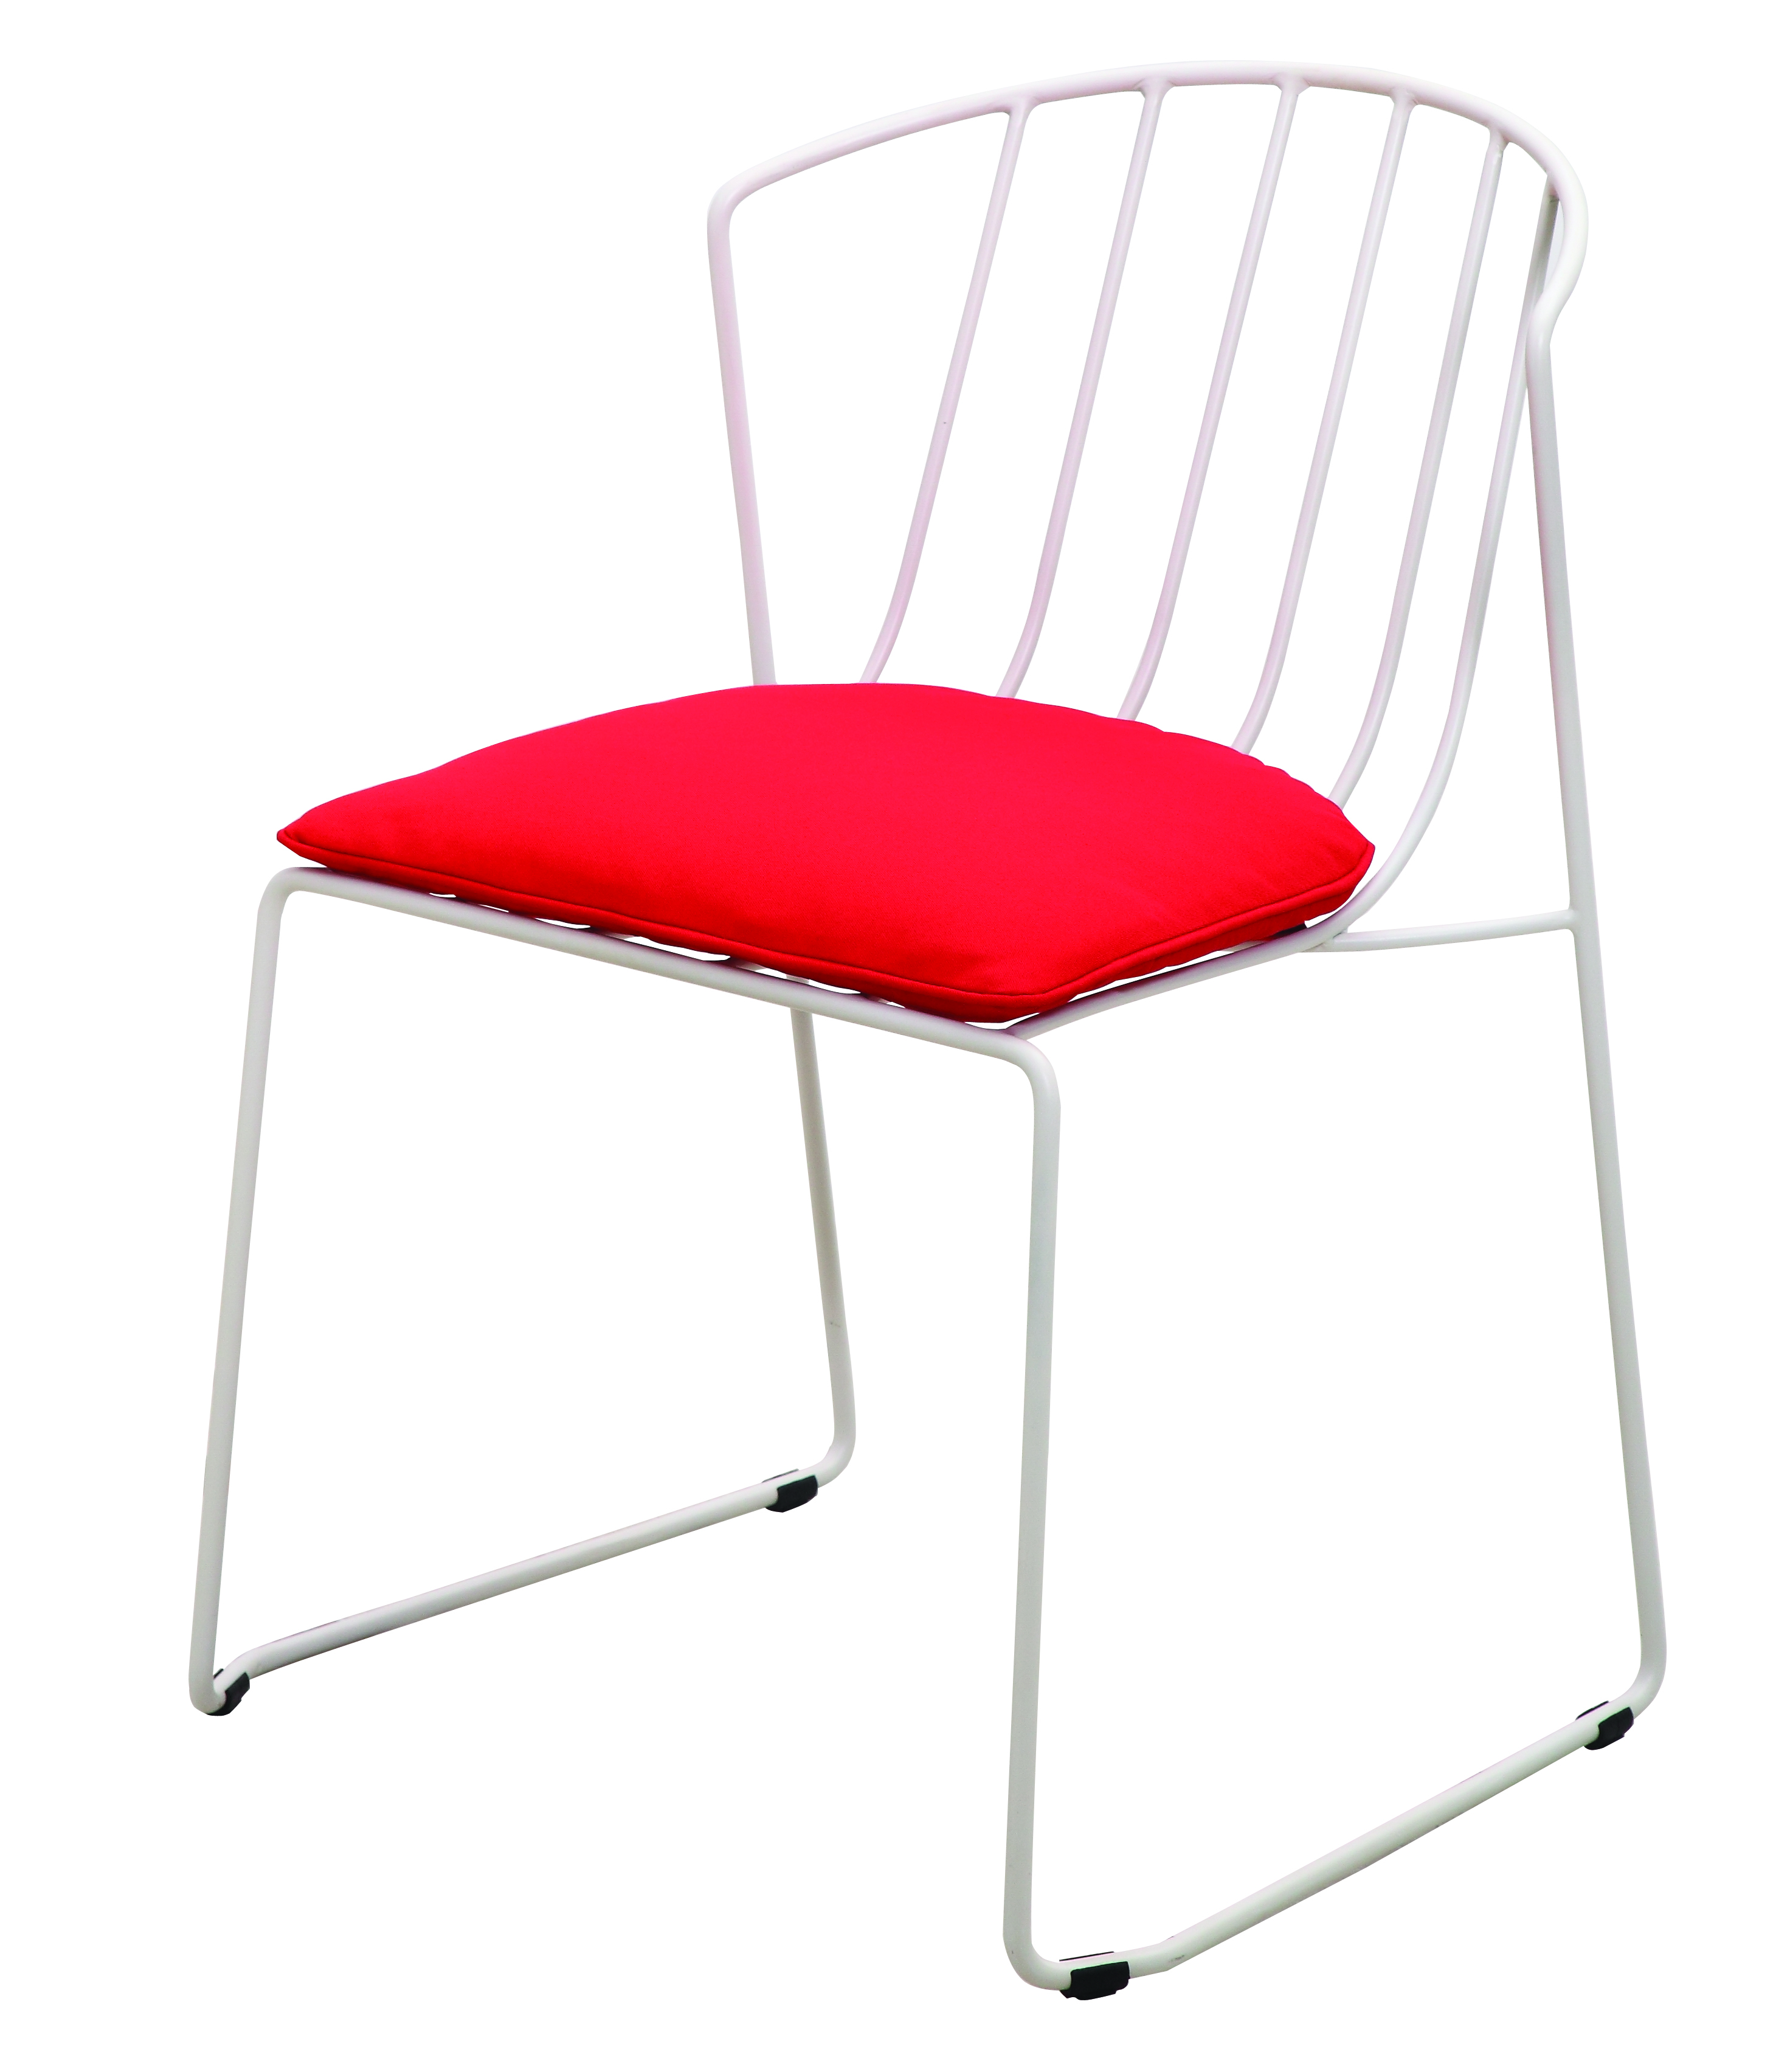 Kannoa Interlace Collection chair